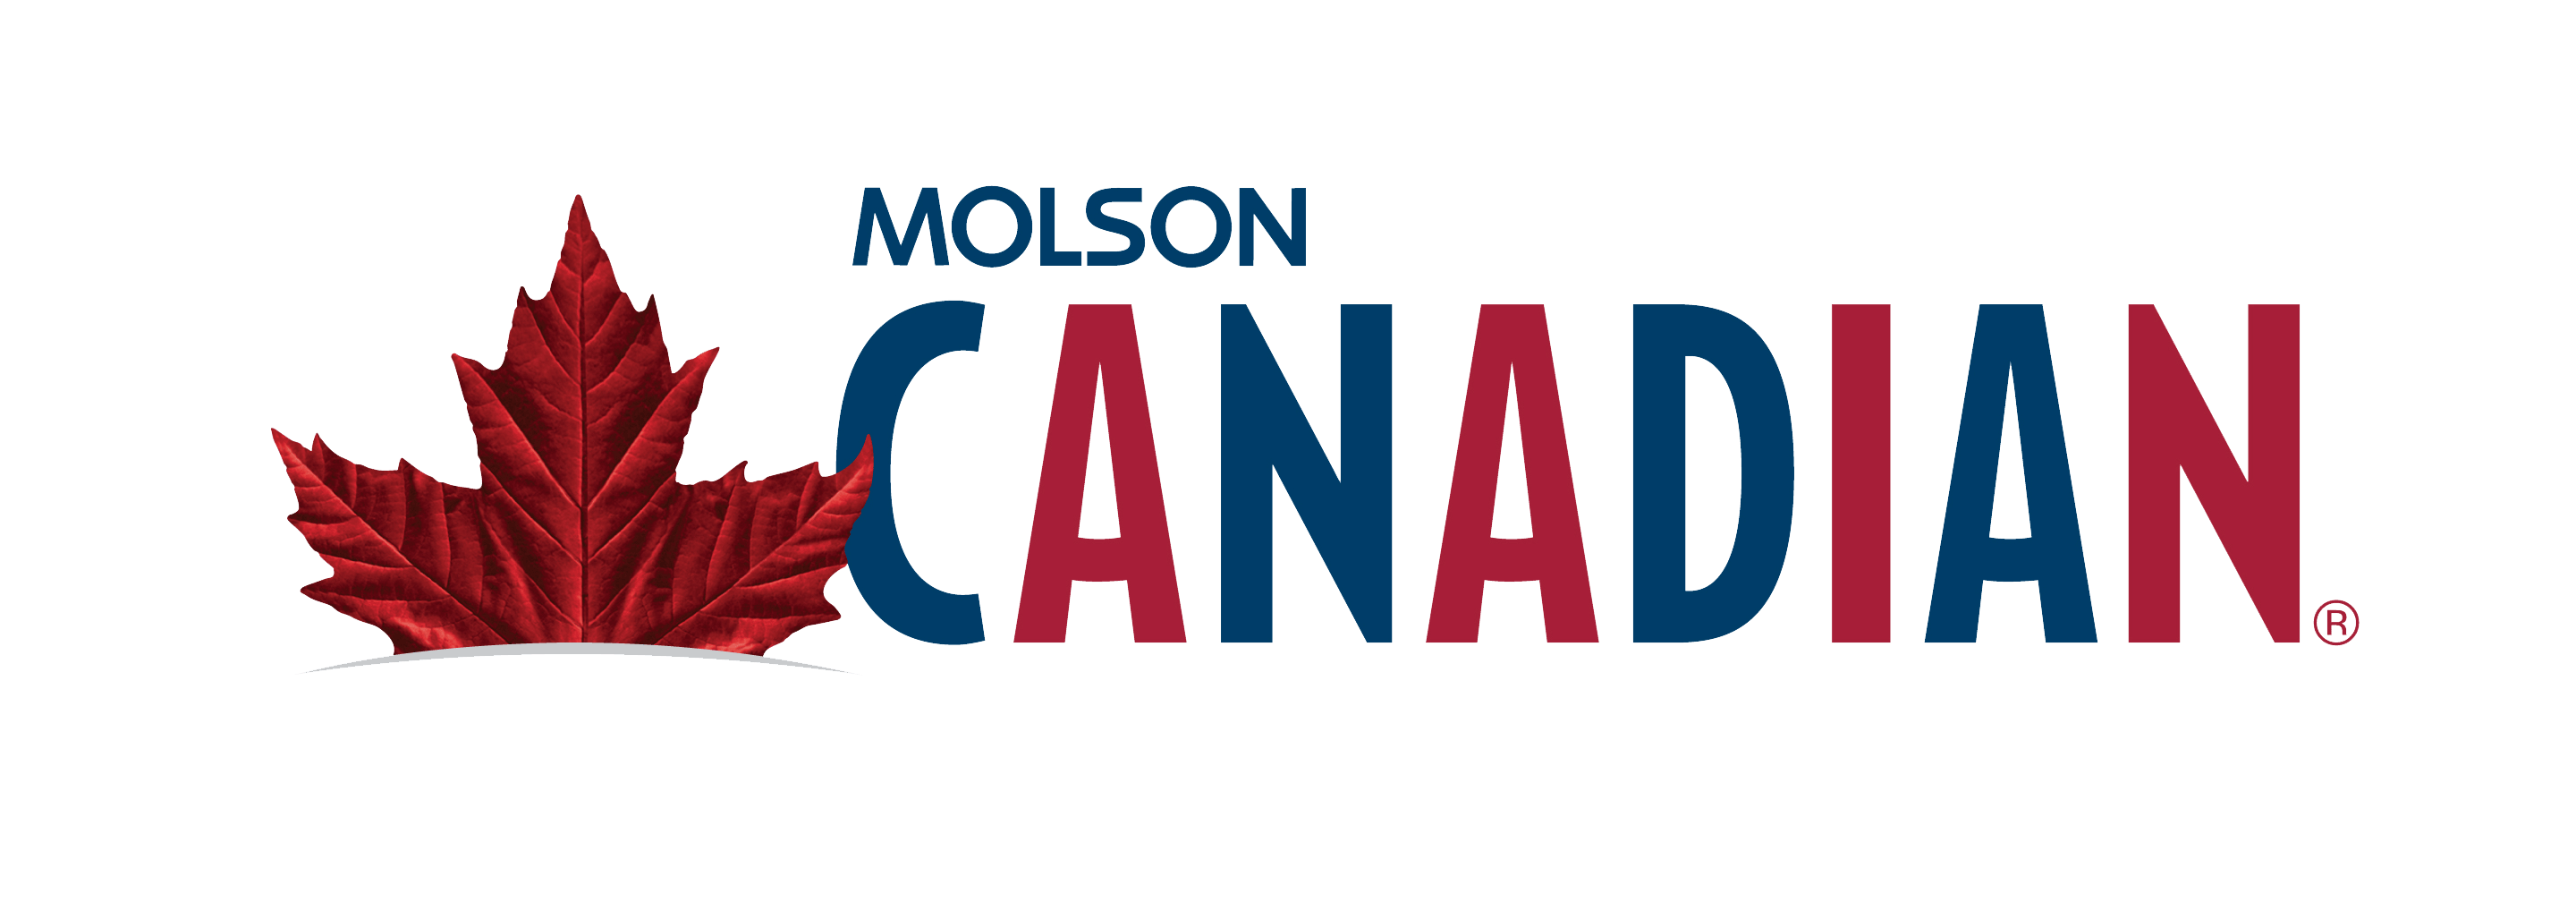 molson-canadian